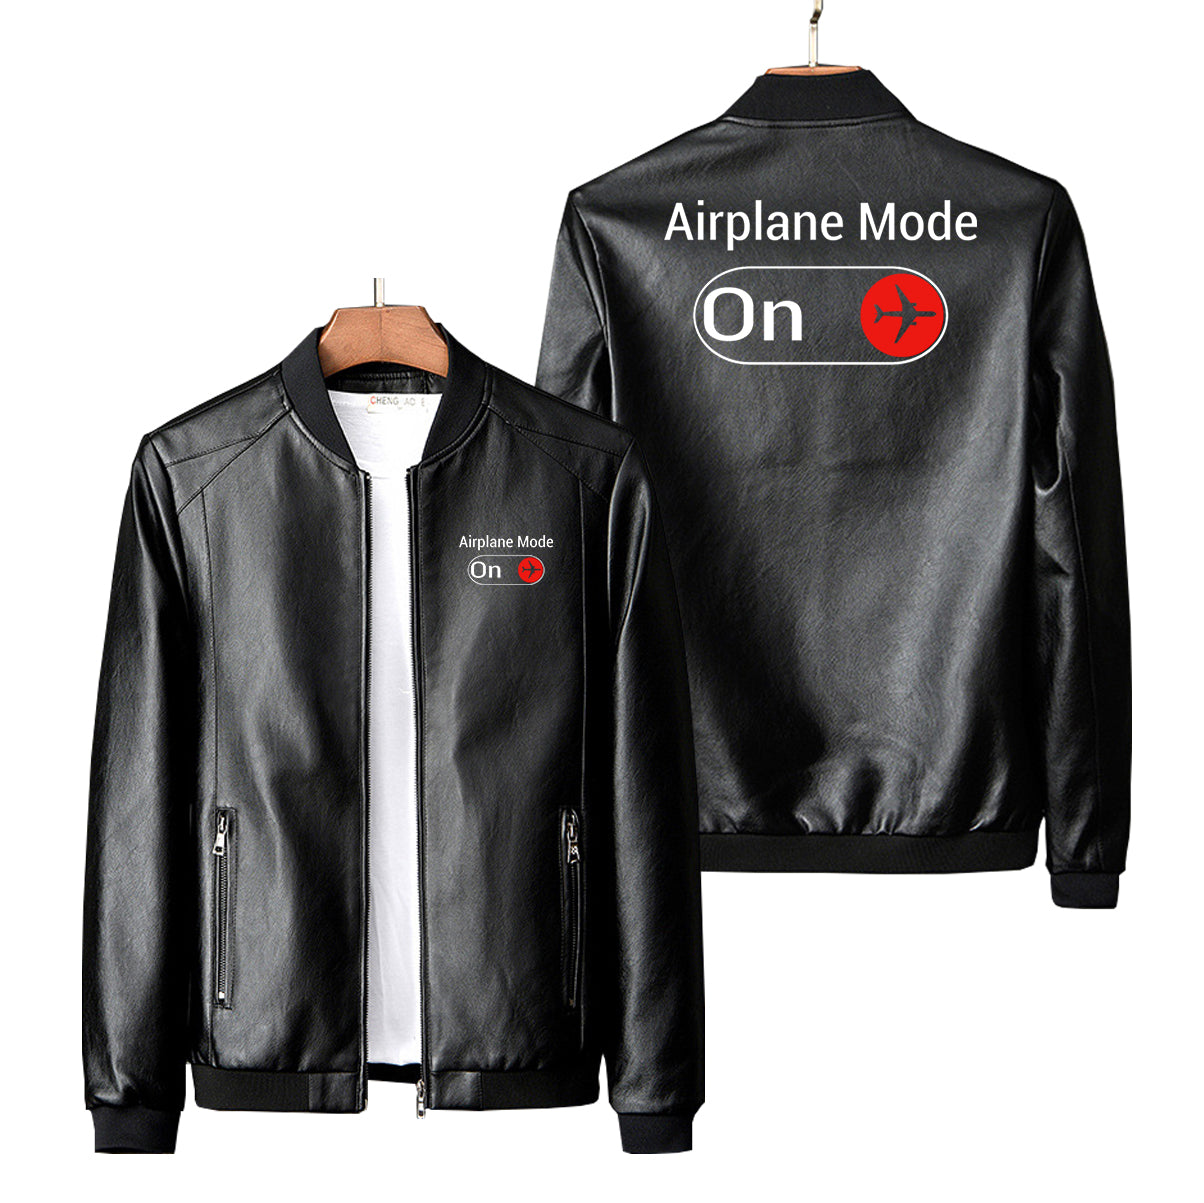 Airplane Mode On Designed PU Leather Jackets